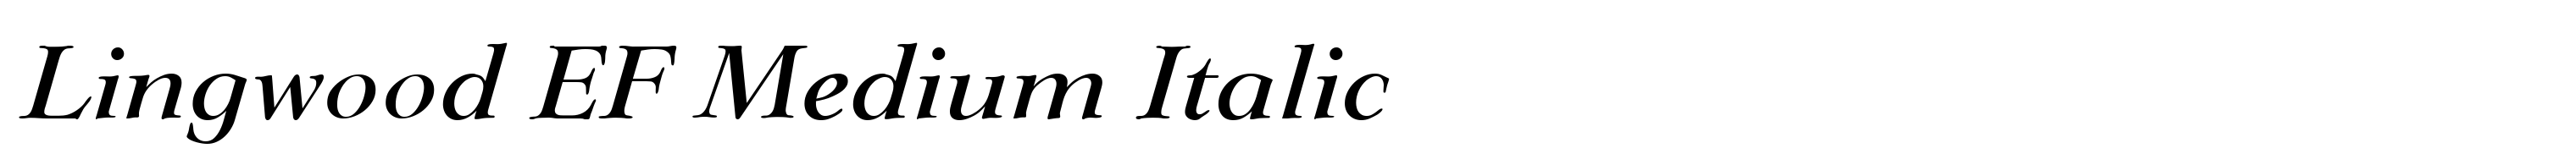 Lingwood EF Medium Italic